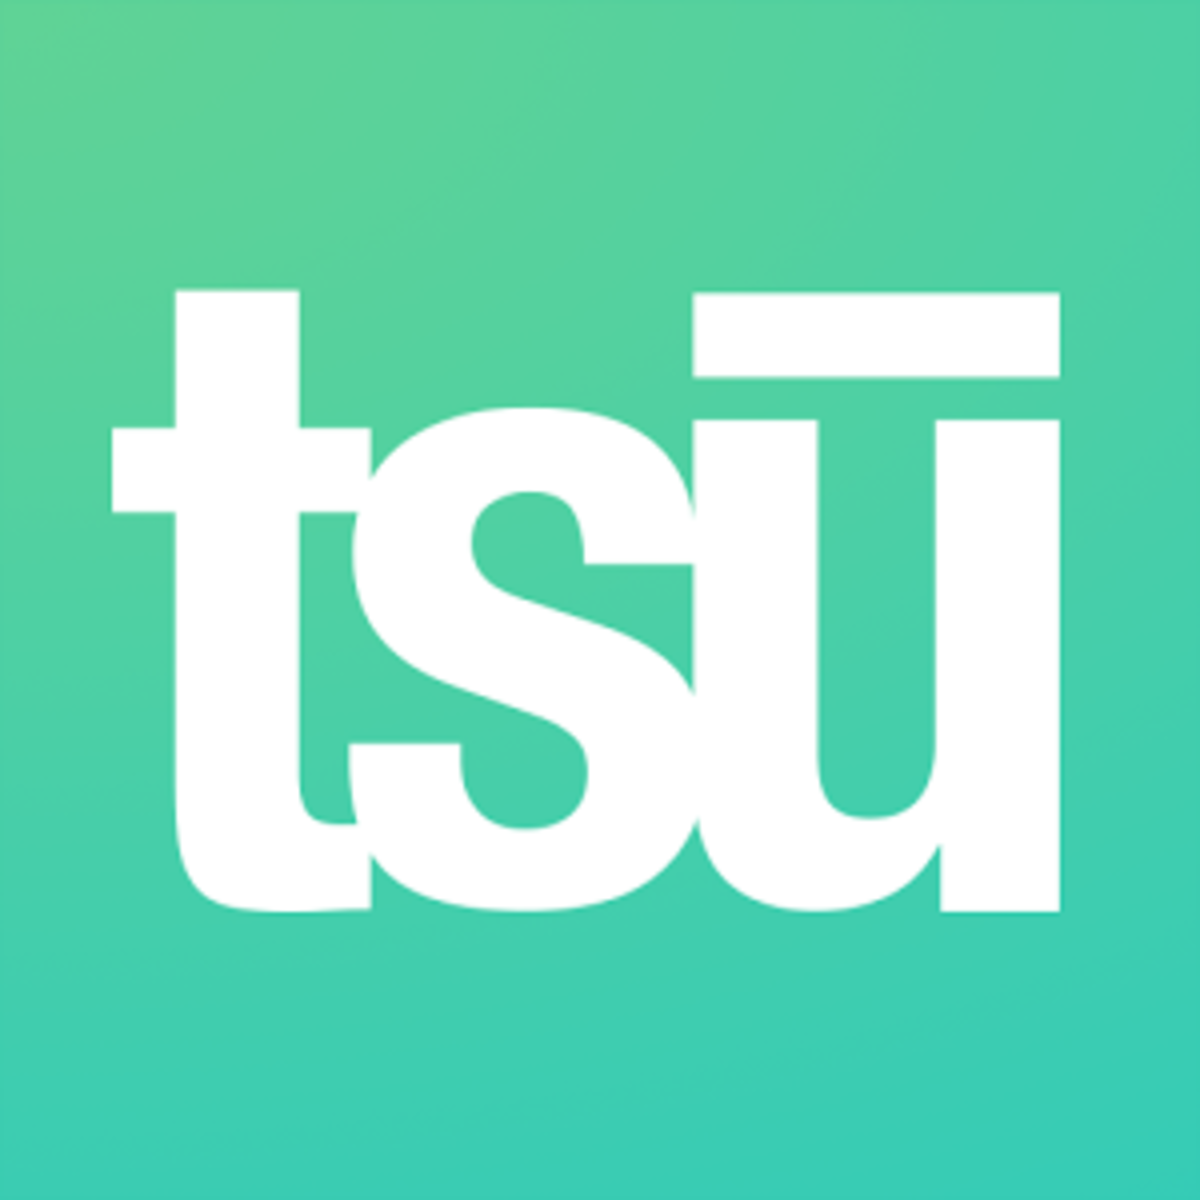 TS initial logo - ST initial 